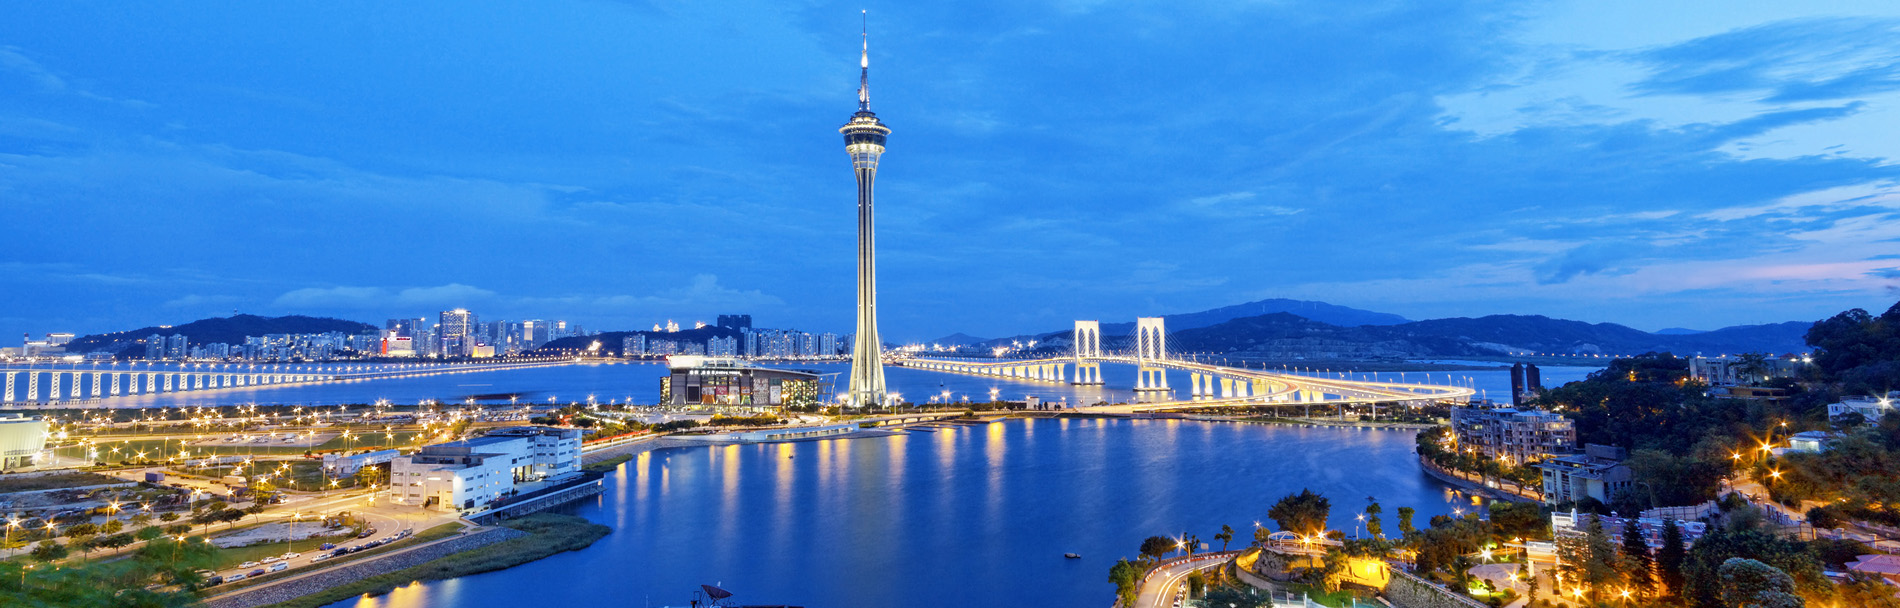 Macau Tour Packages